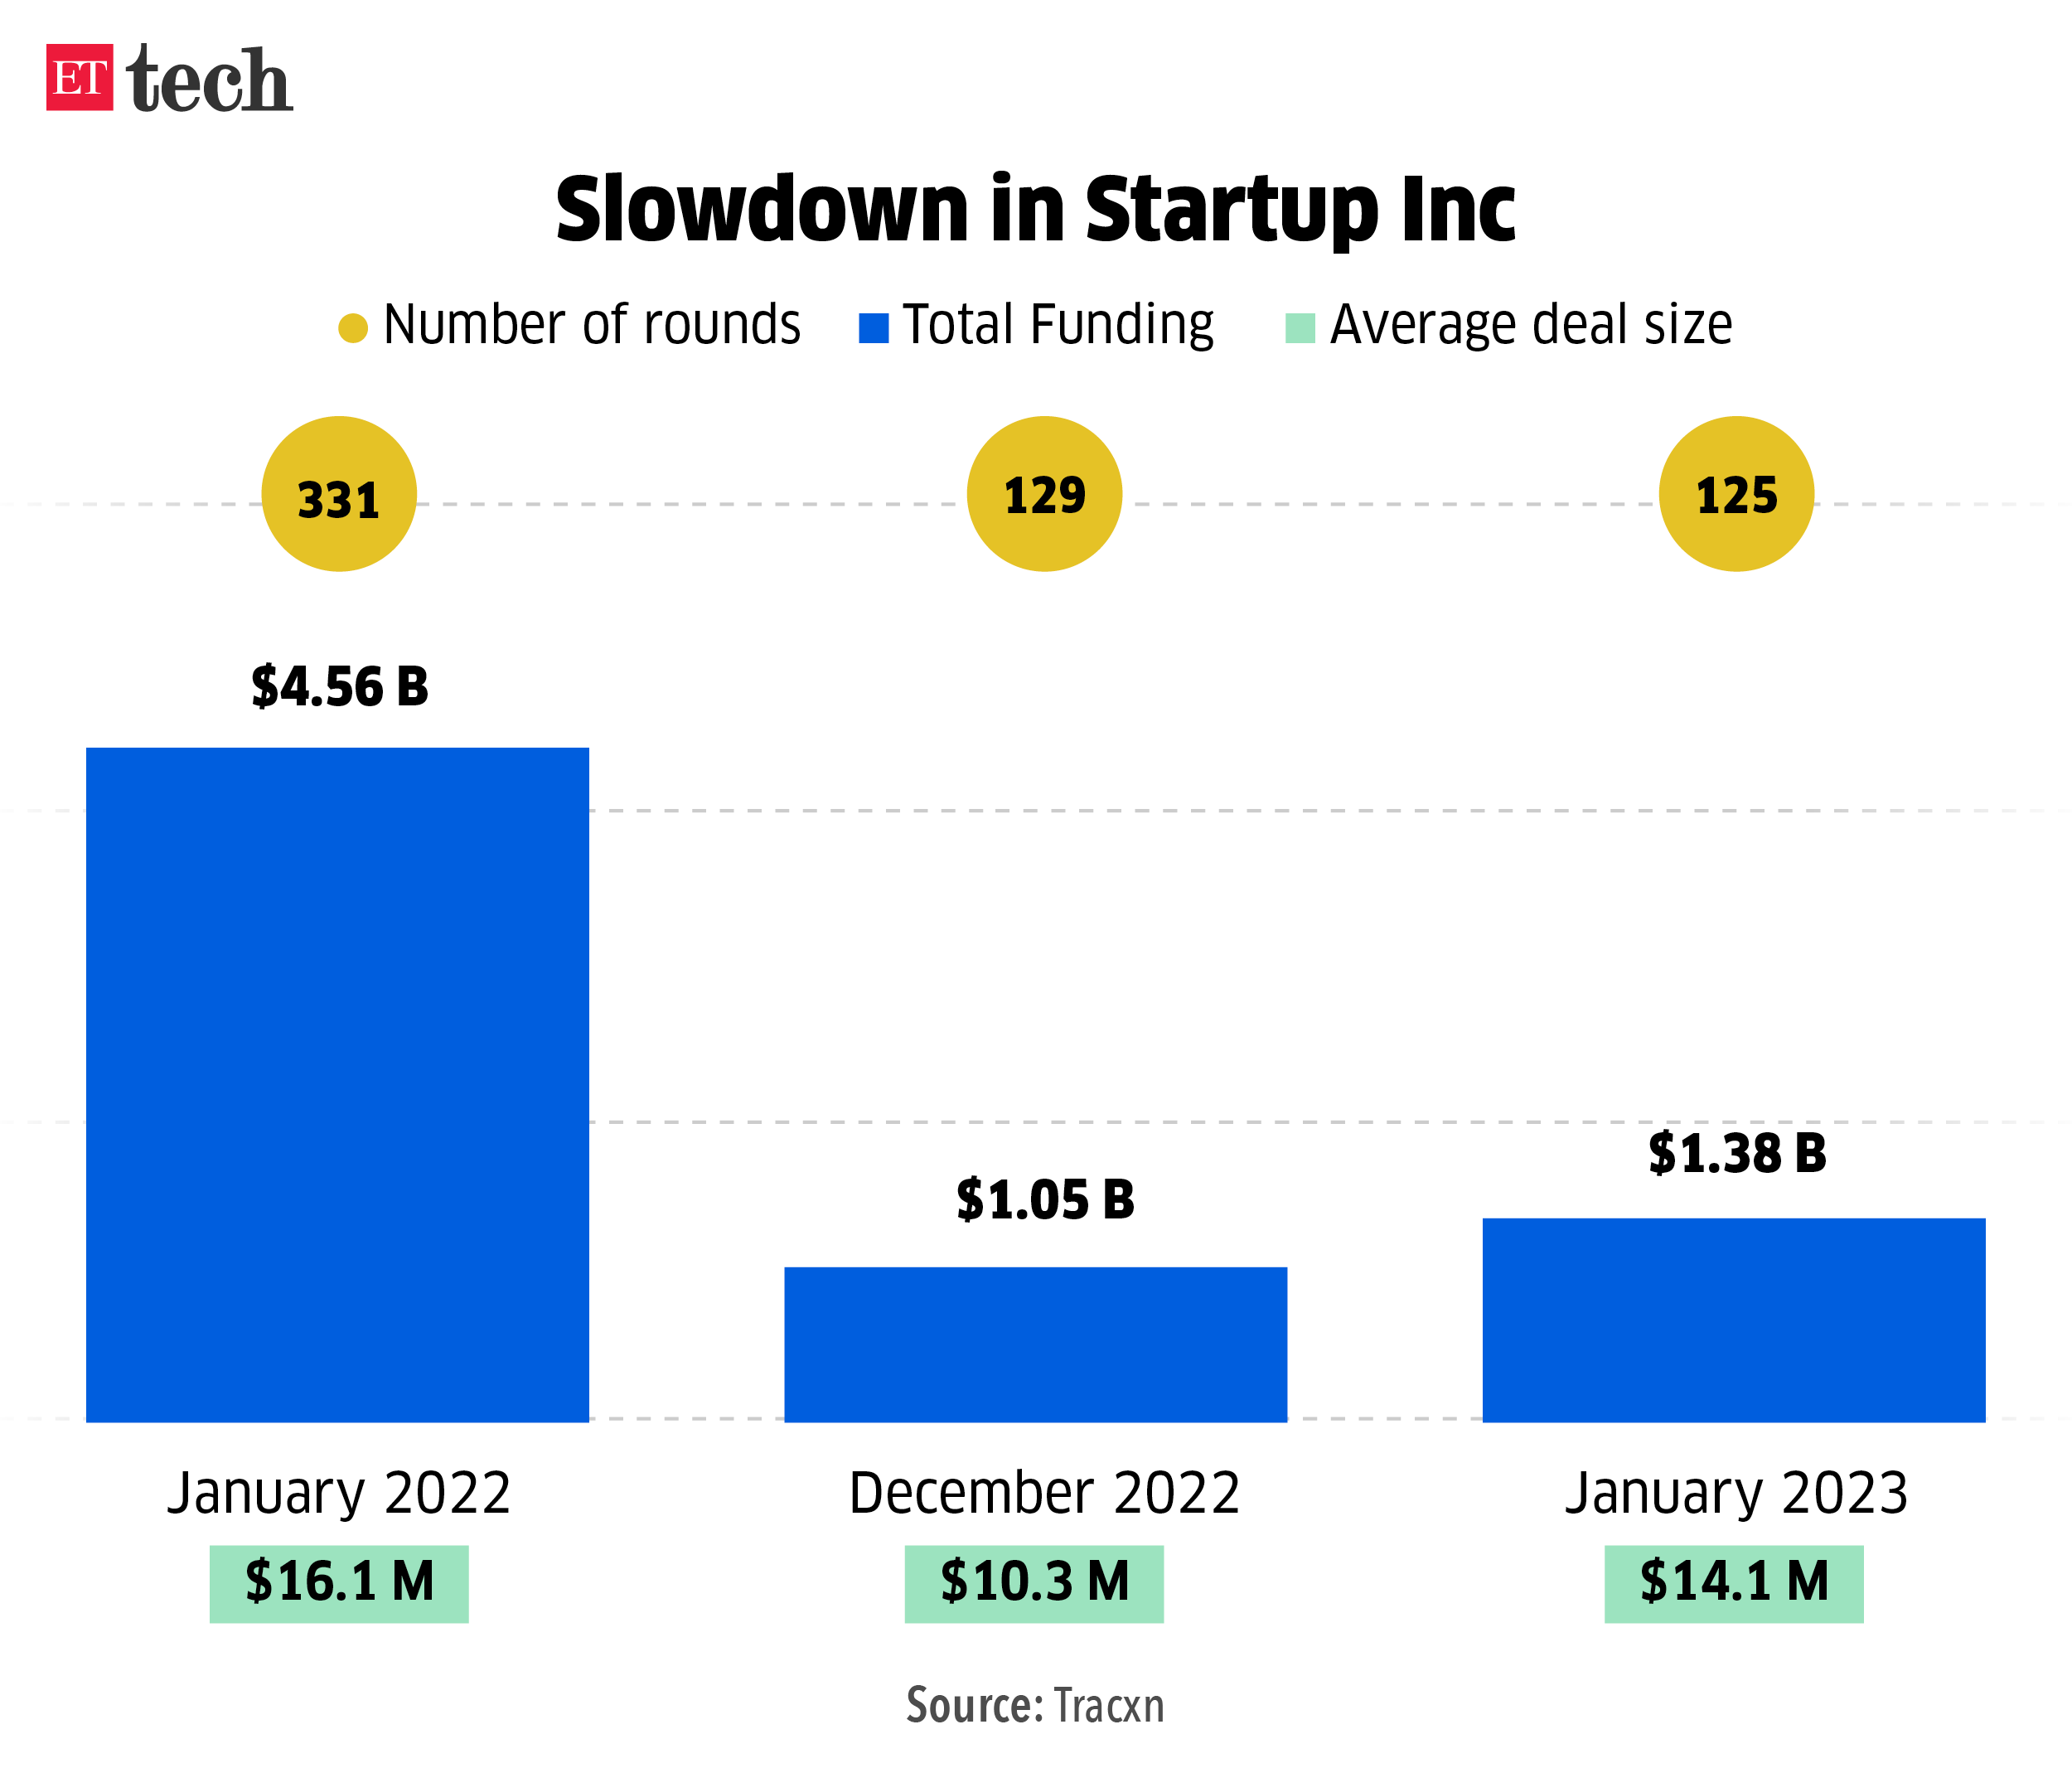 Slowdown in Startup Inc